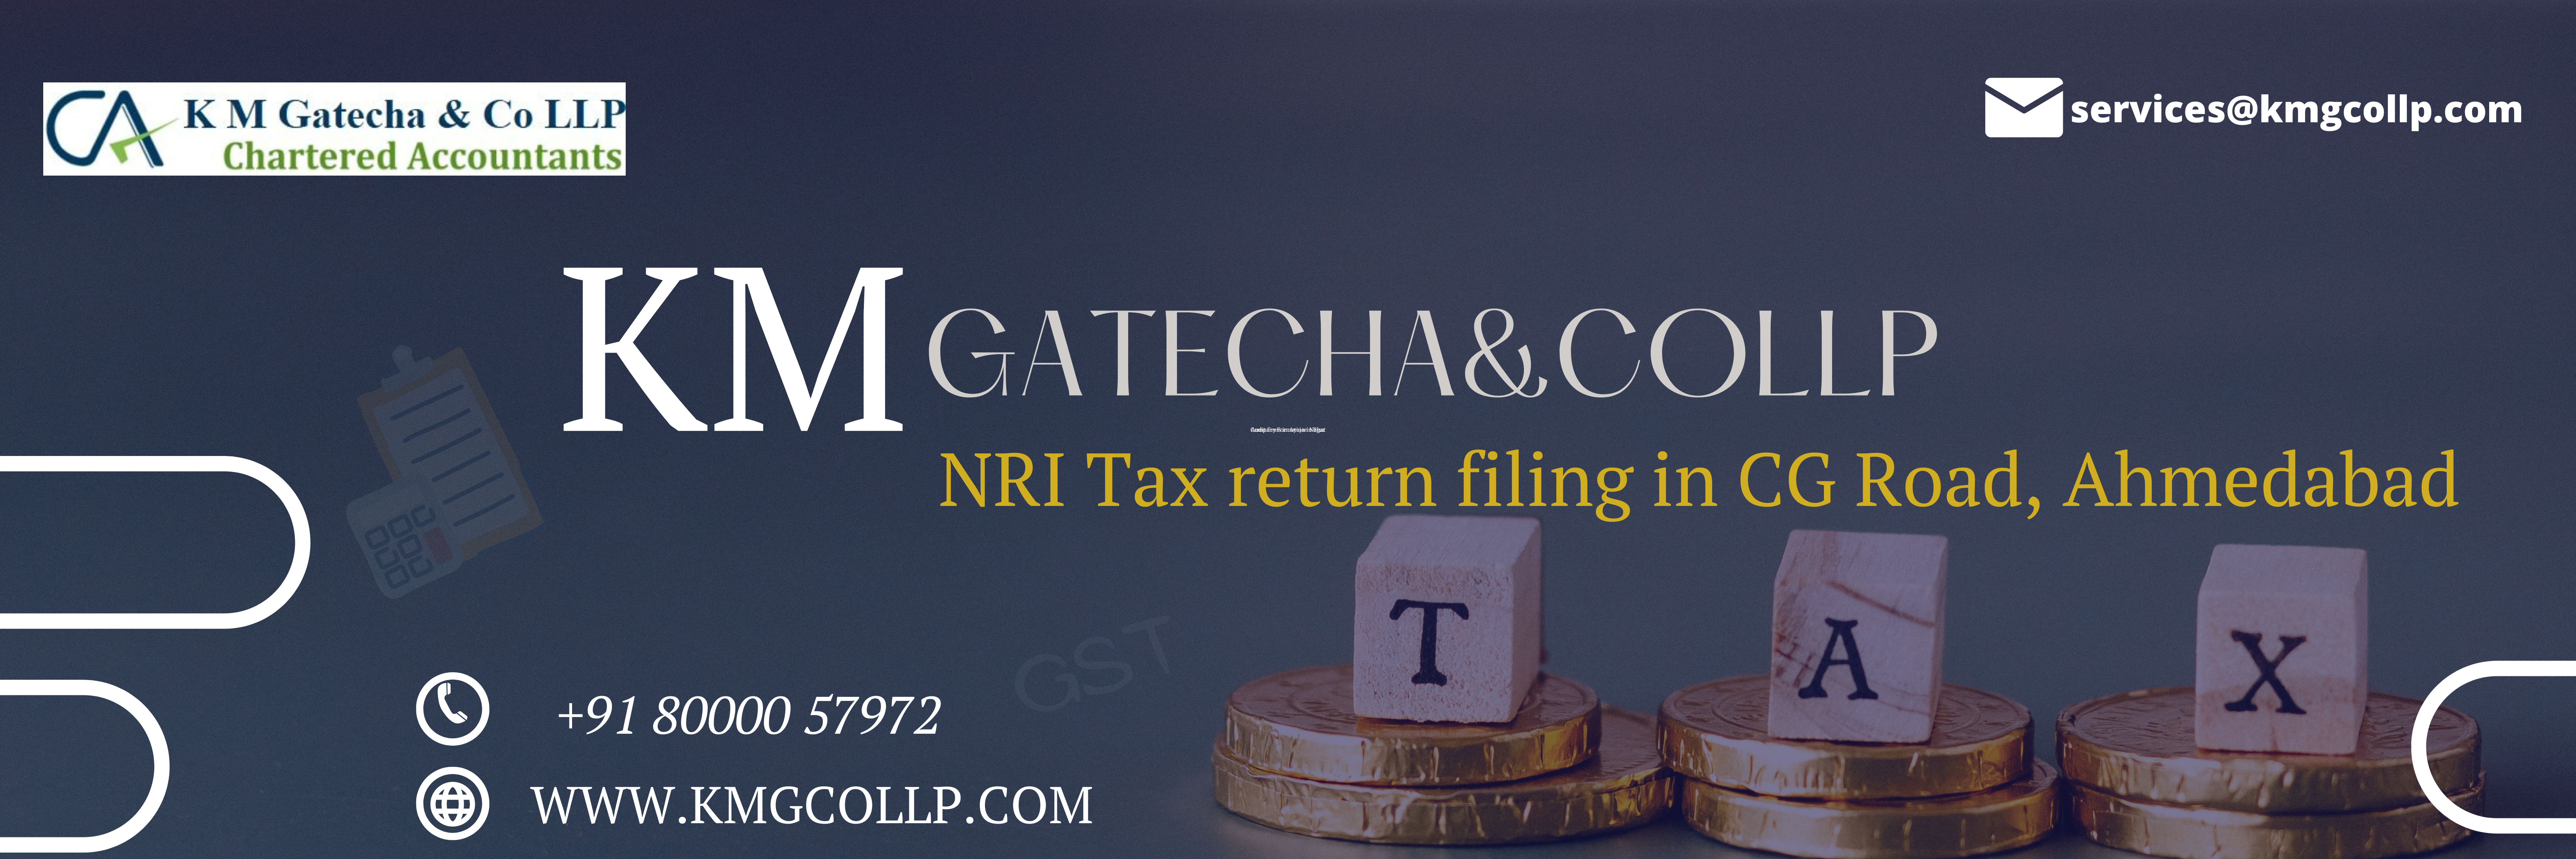 NRI Tax return filing in CG Road, Ahmedabad